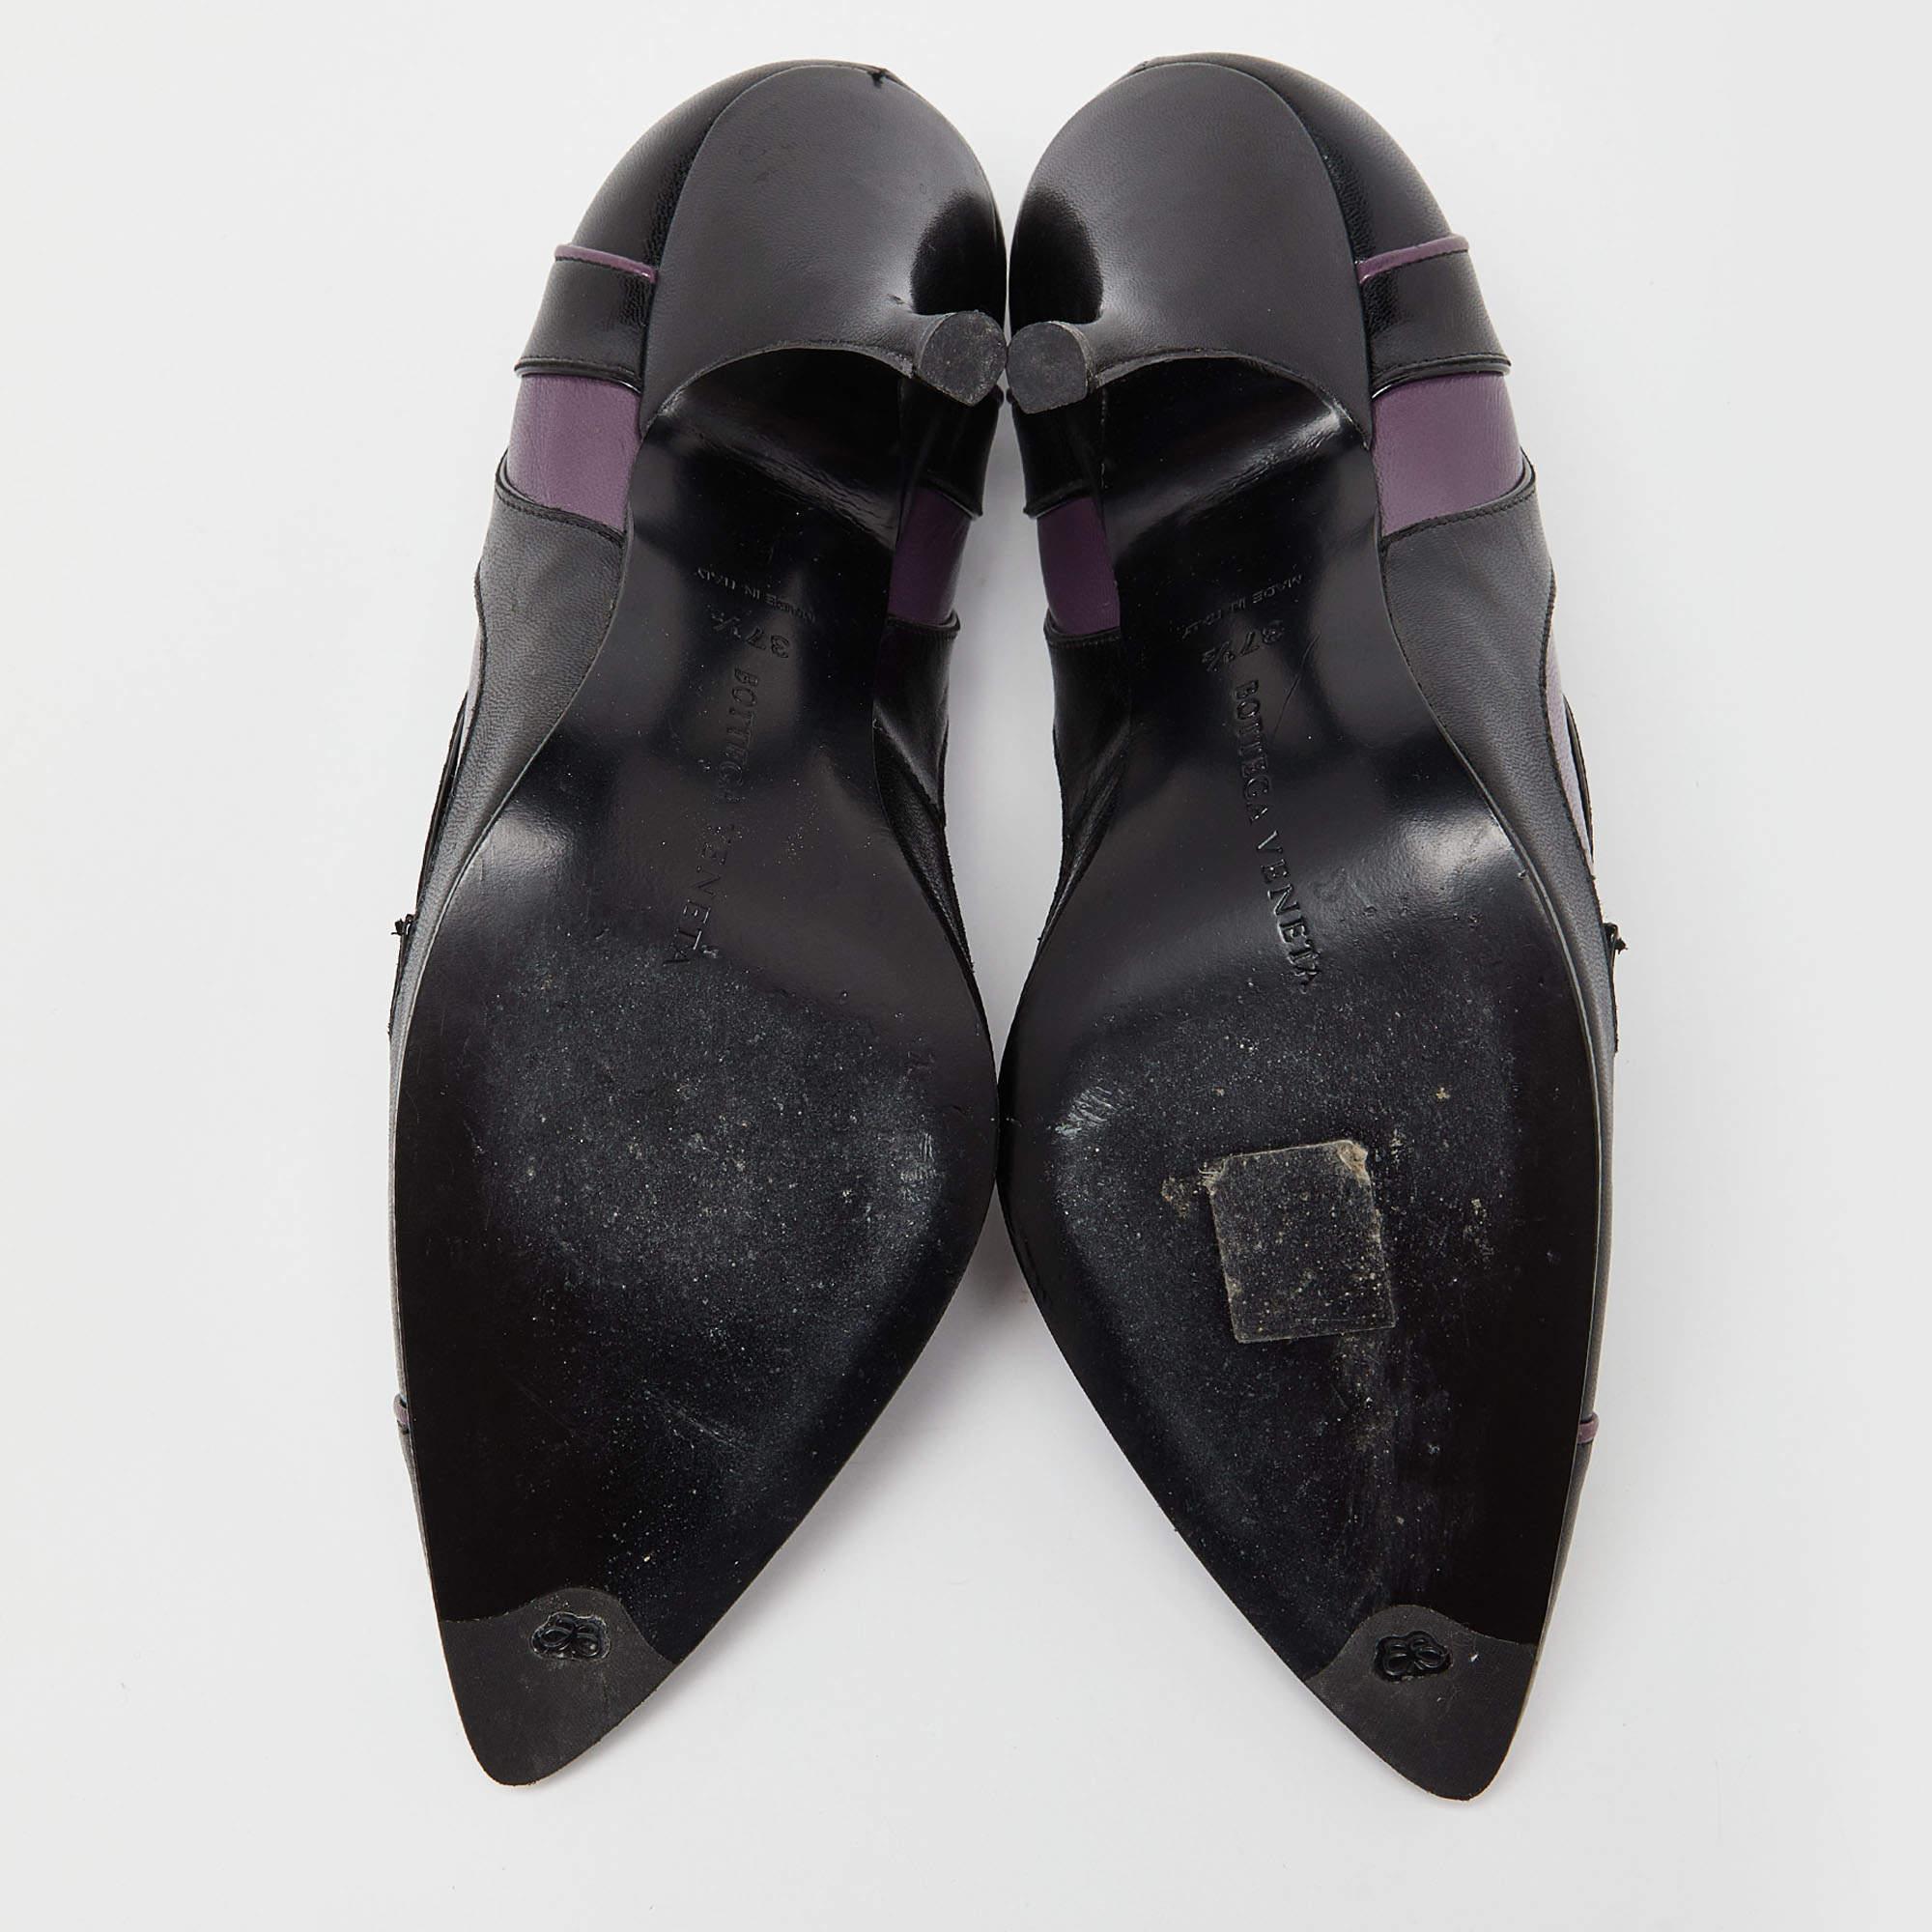 Bottega Veneta Black/Purple Leather Pumps Size 37.5 3